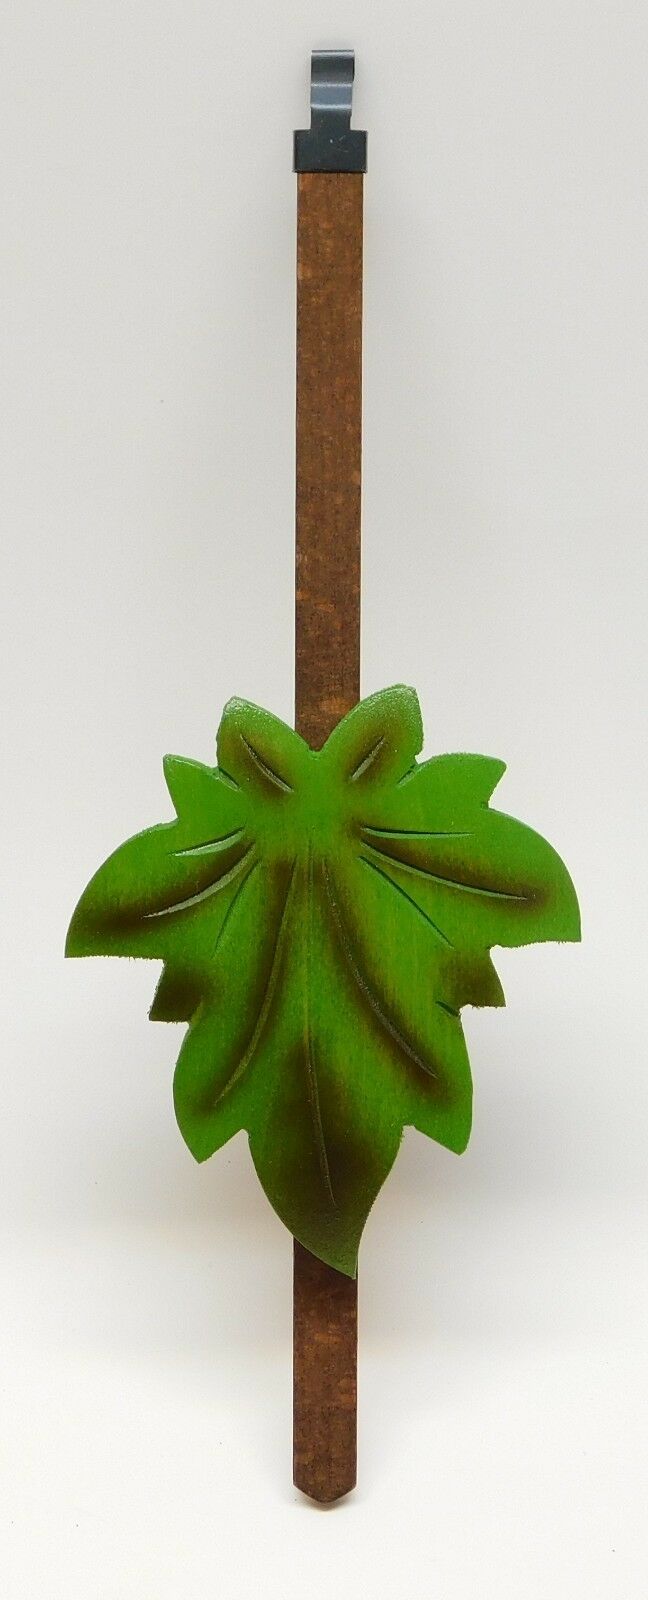 High-Quality Green Maple Leaf Cuckoo Clock Pendulum with Timekeeping Adjustment - 3" x 8 3/4"